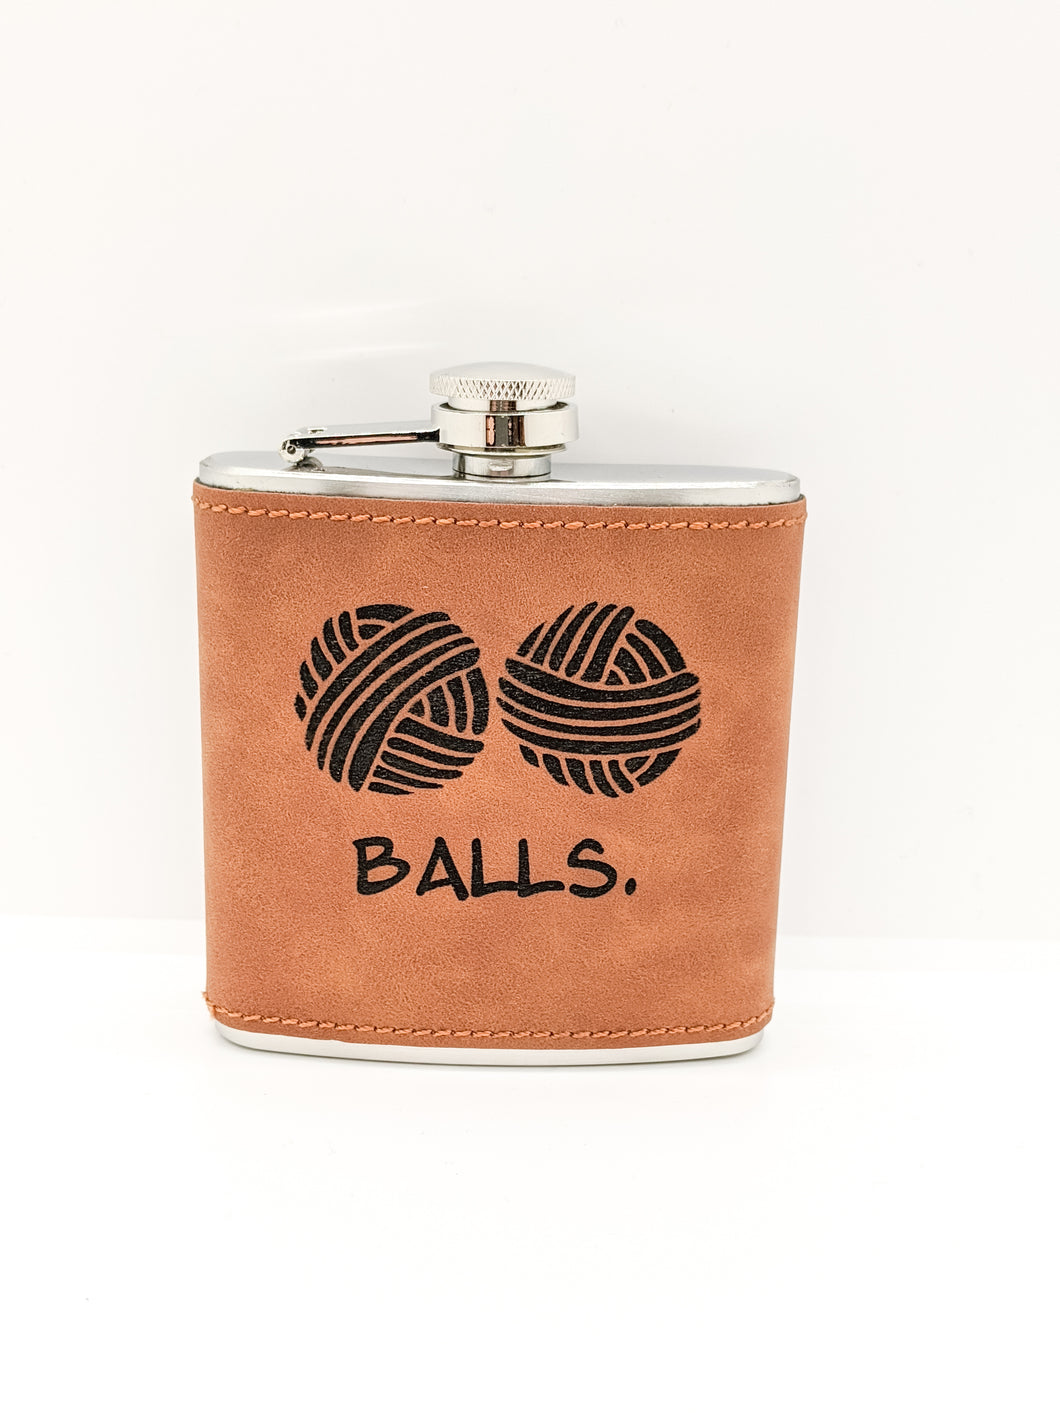 Balls flask